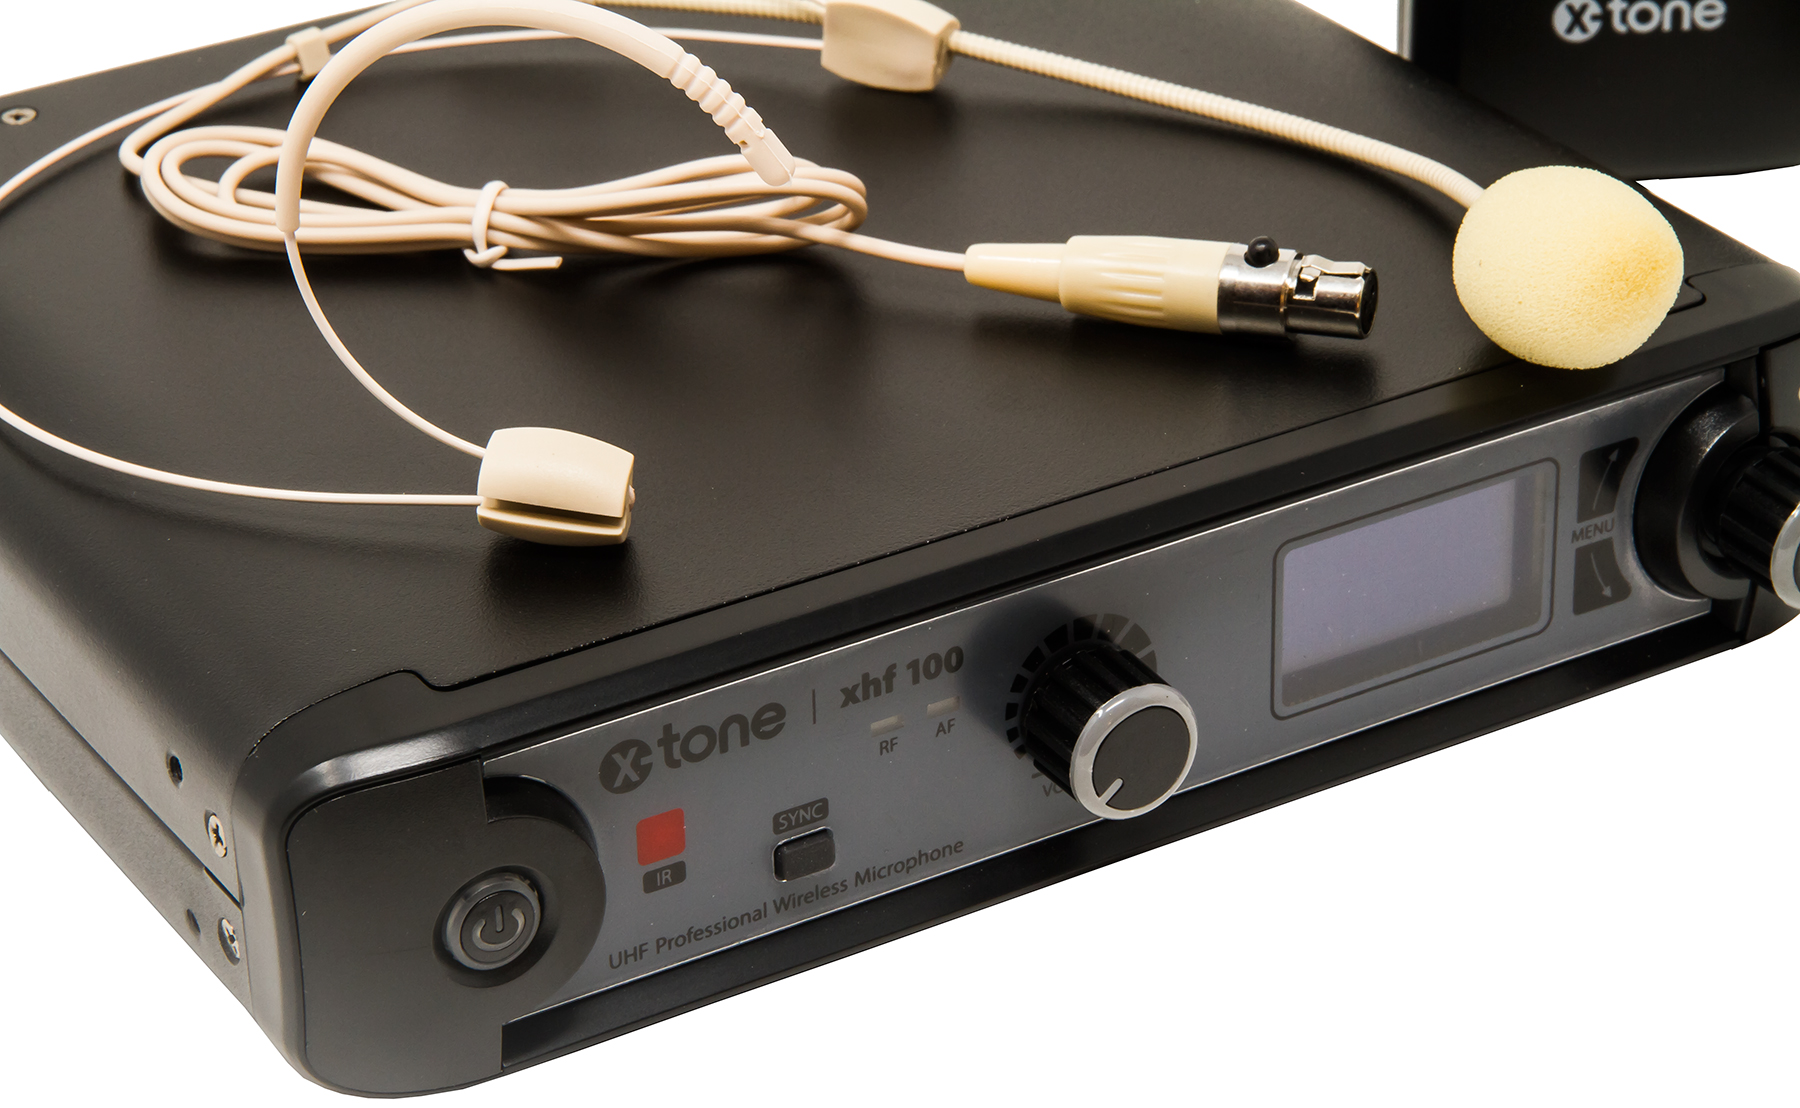 X-tone Xhf100h Systeme Hf Serre Tete Frequence Fixe - Micrófono inalámbrico headset - Variation 1